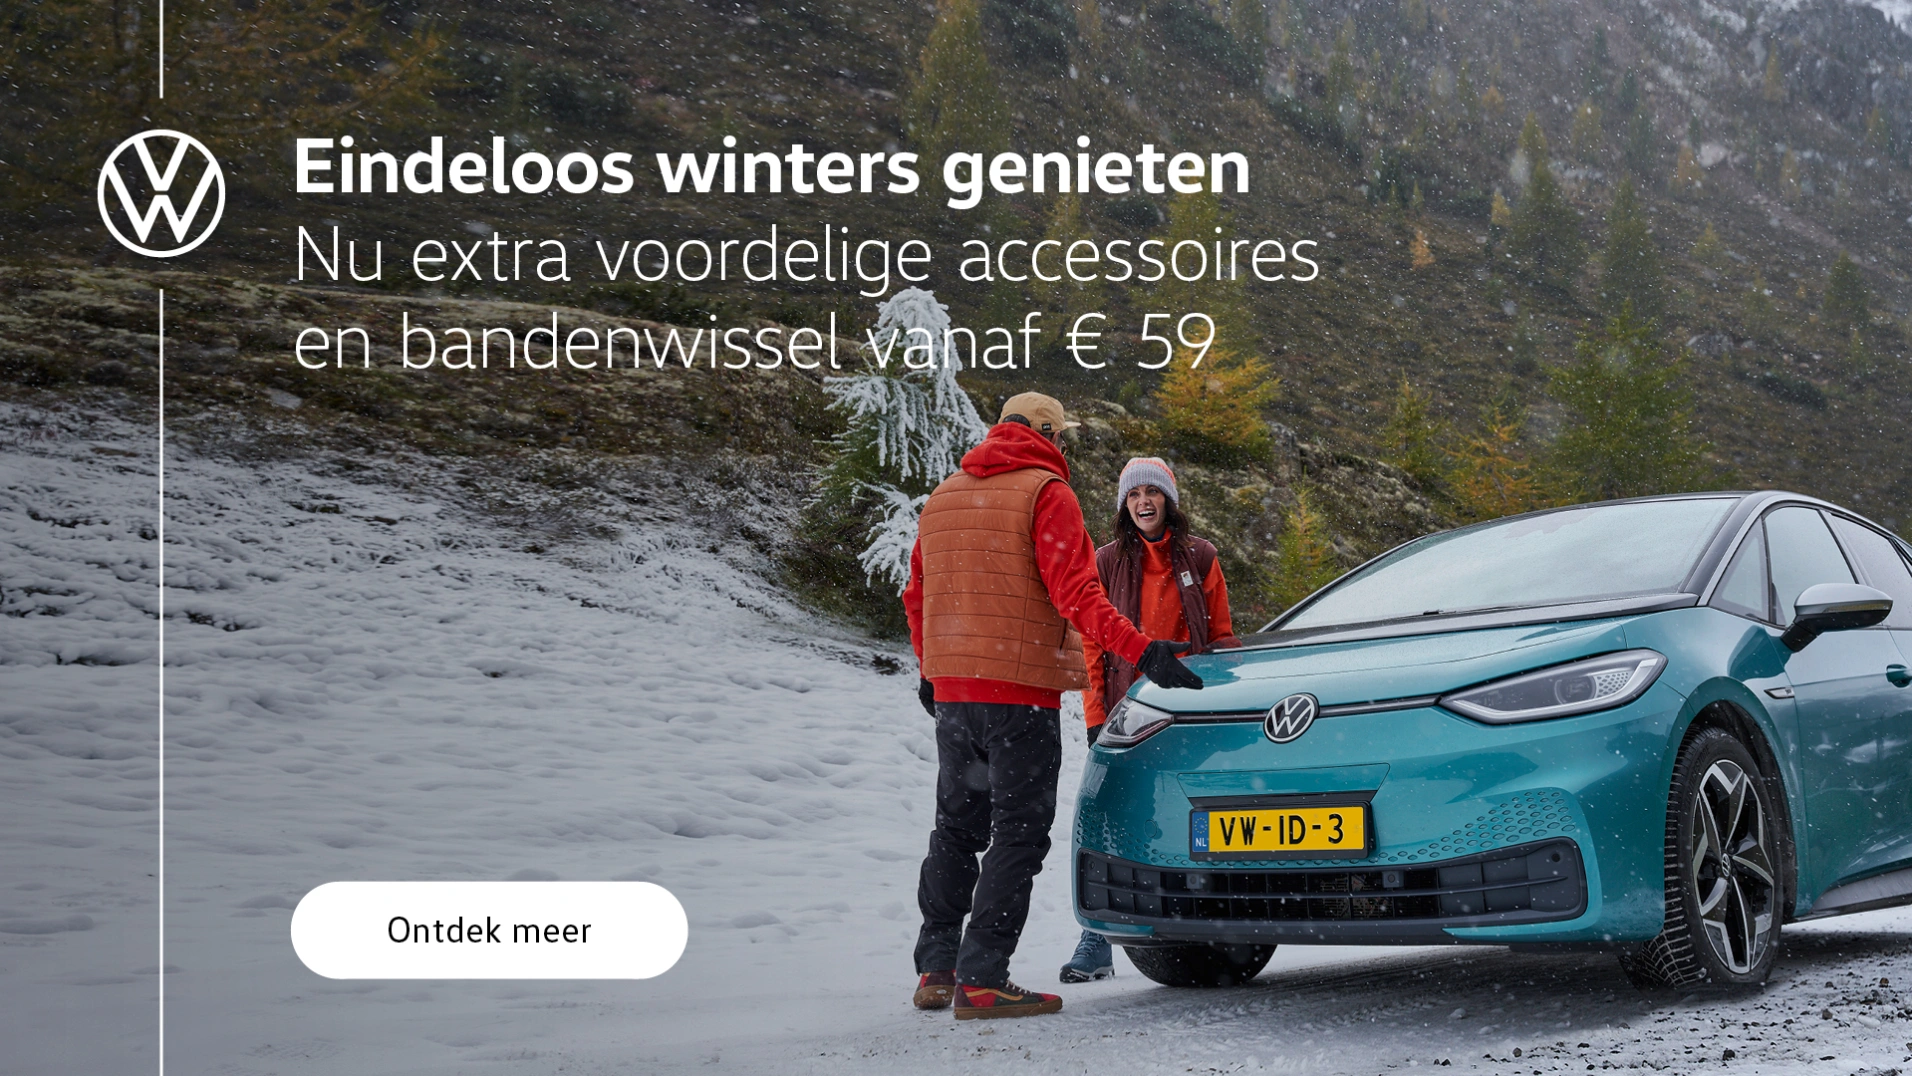 VW2300-03-Wintercampagne-Banners-Herfst-winter-1920x1080px-2.jpg